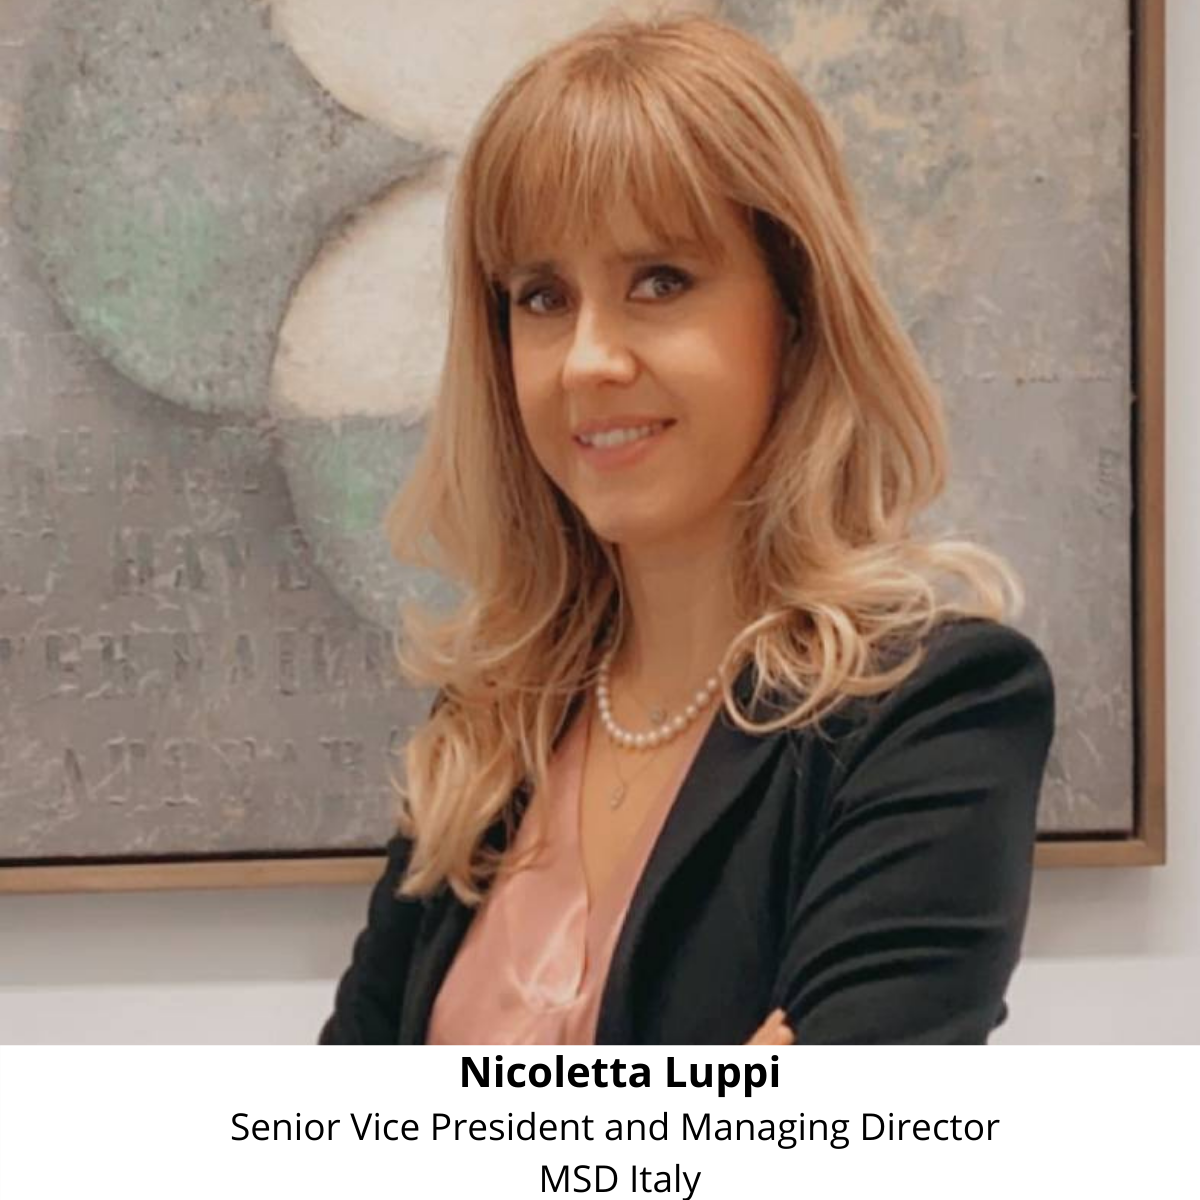 Nicoletta Luppi